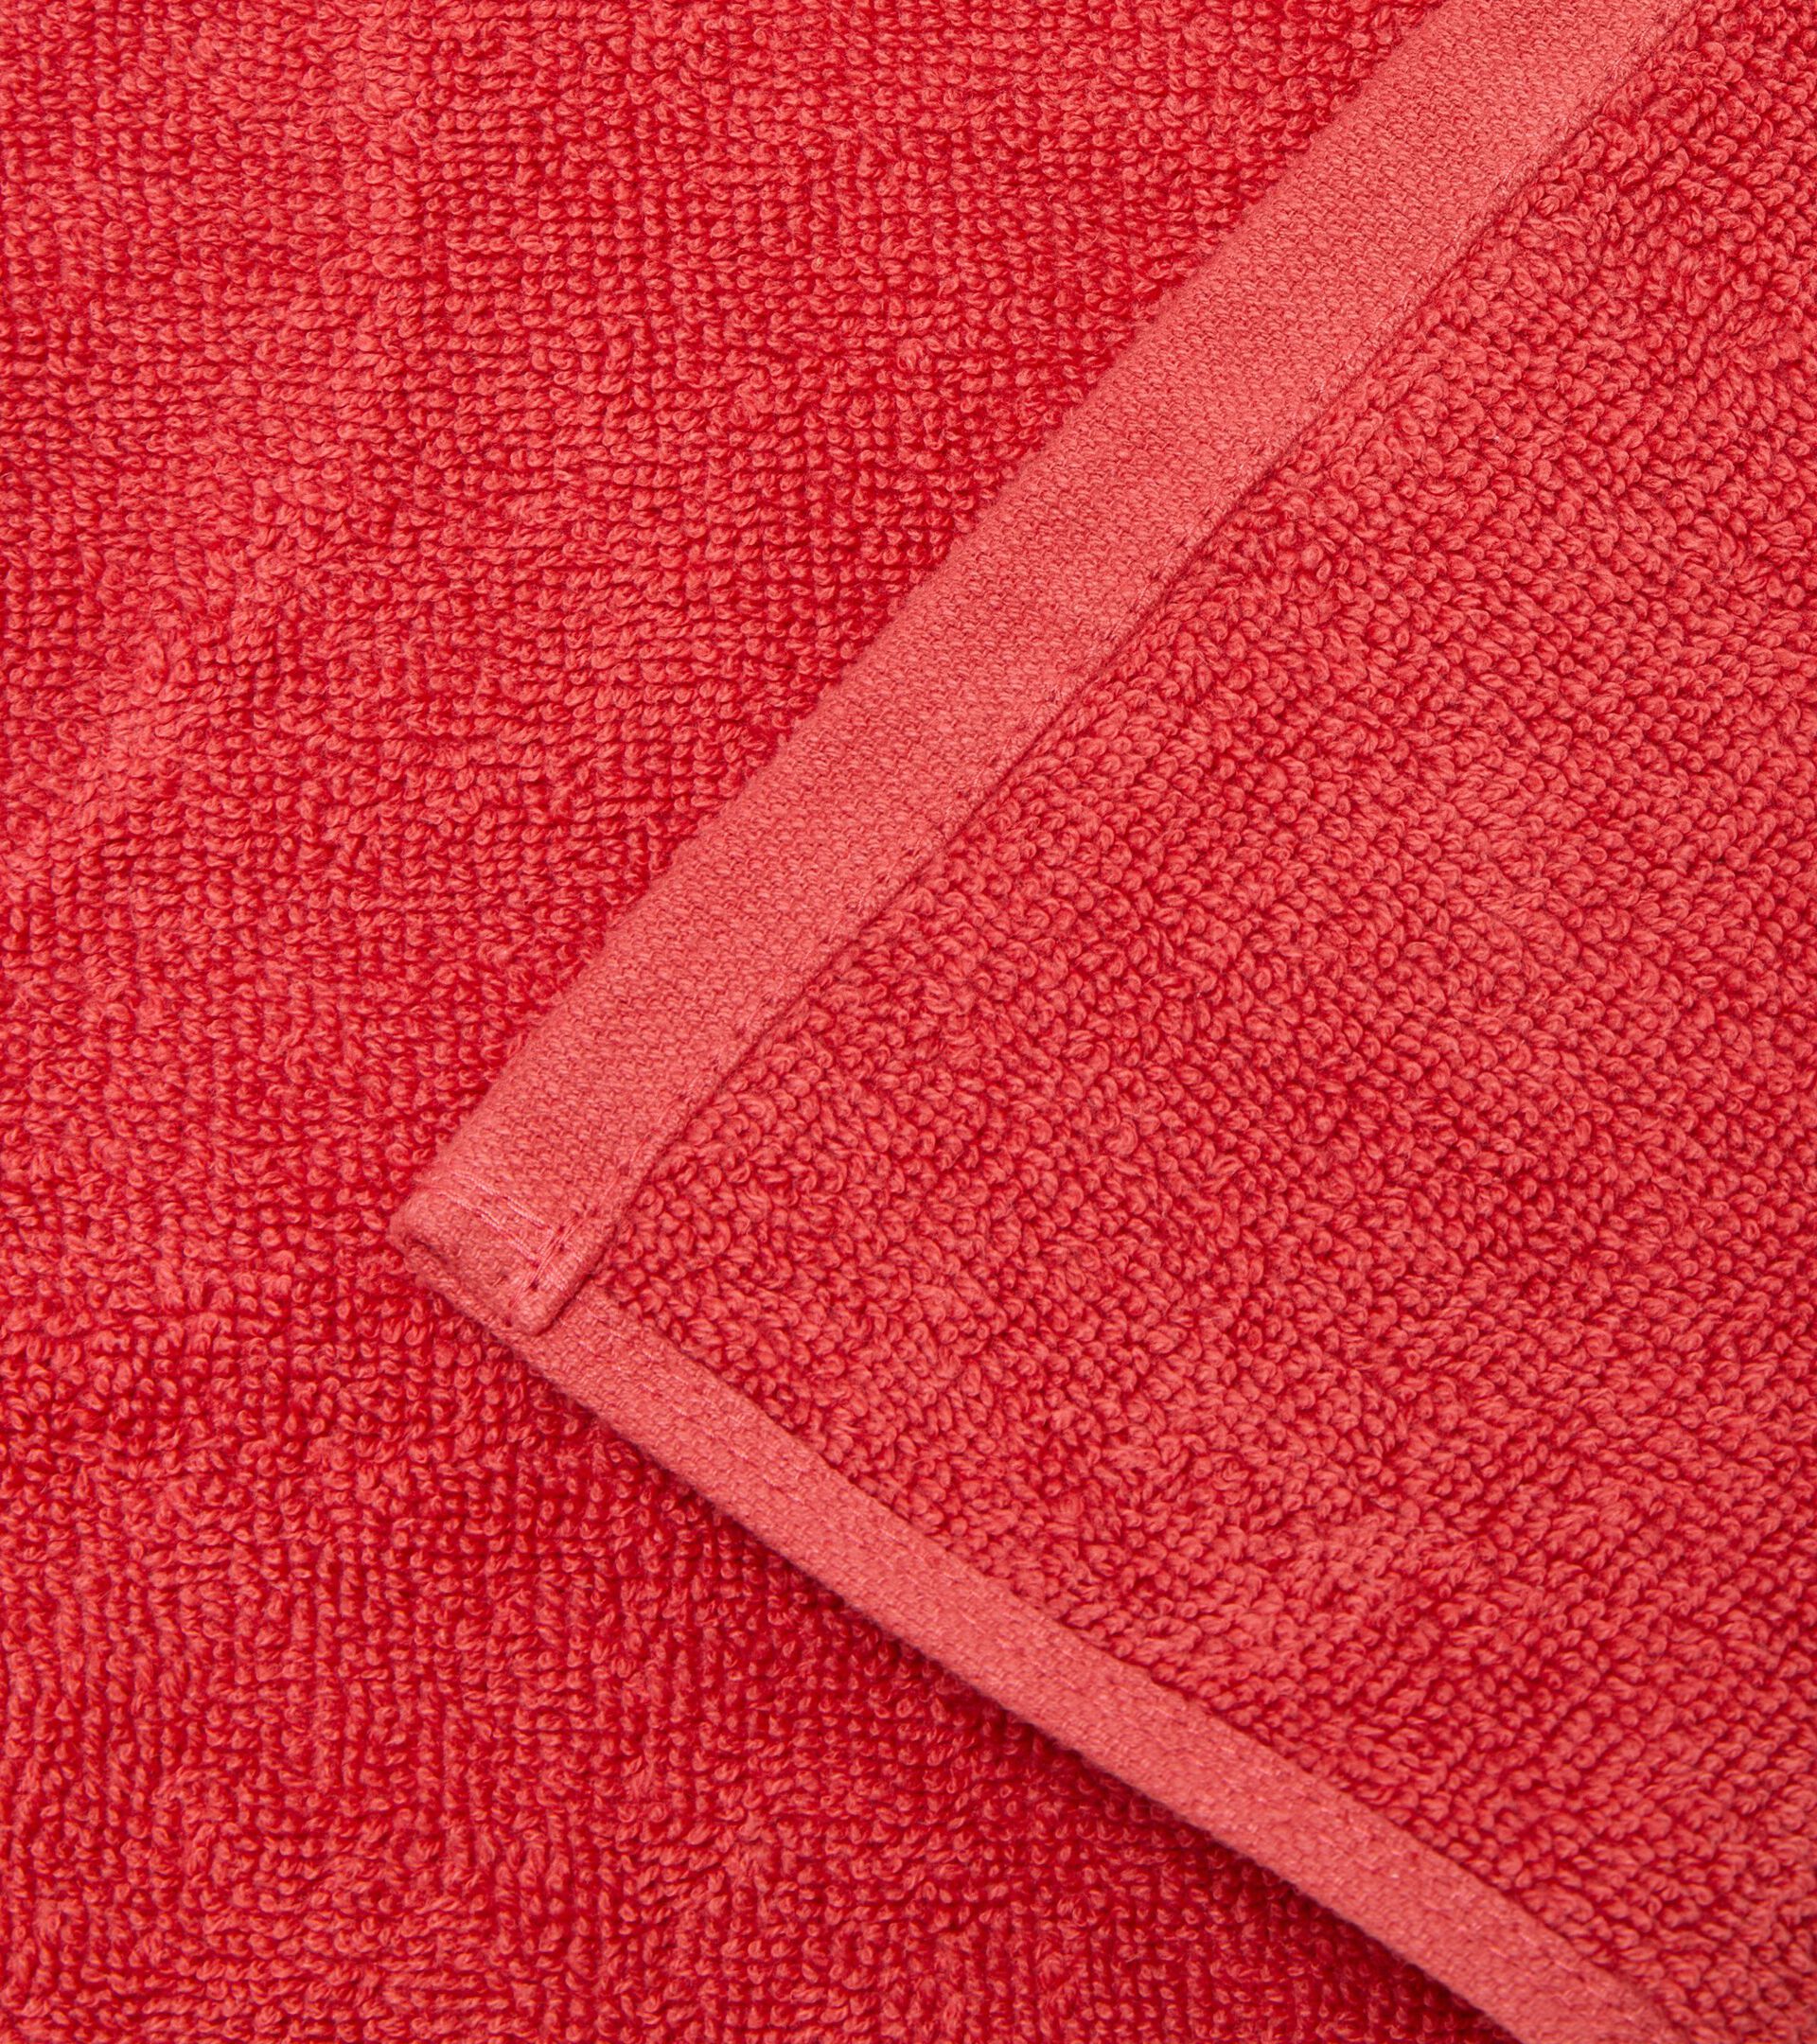 Cotton terry cloth towel TOWEL GYM CAYENNE RED - Diadora